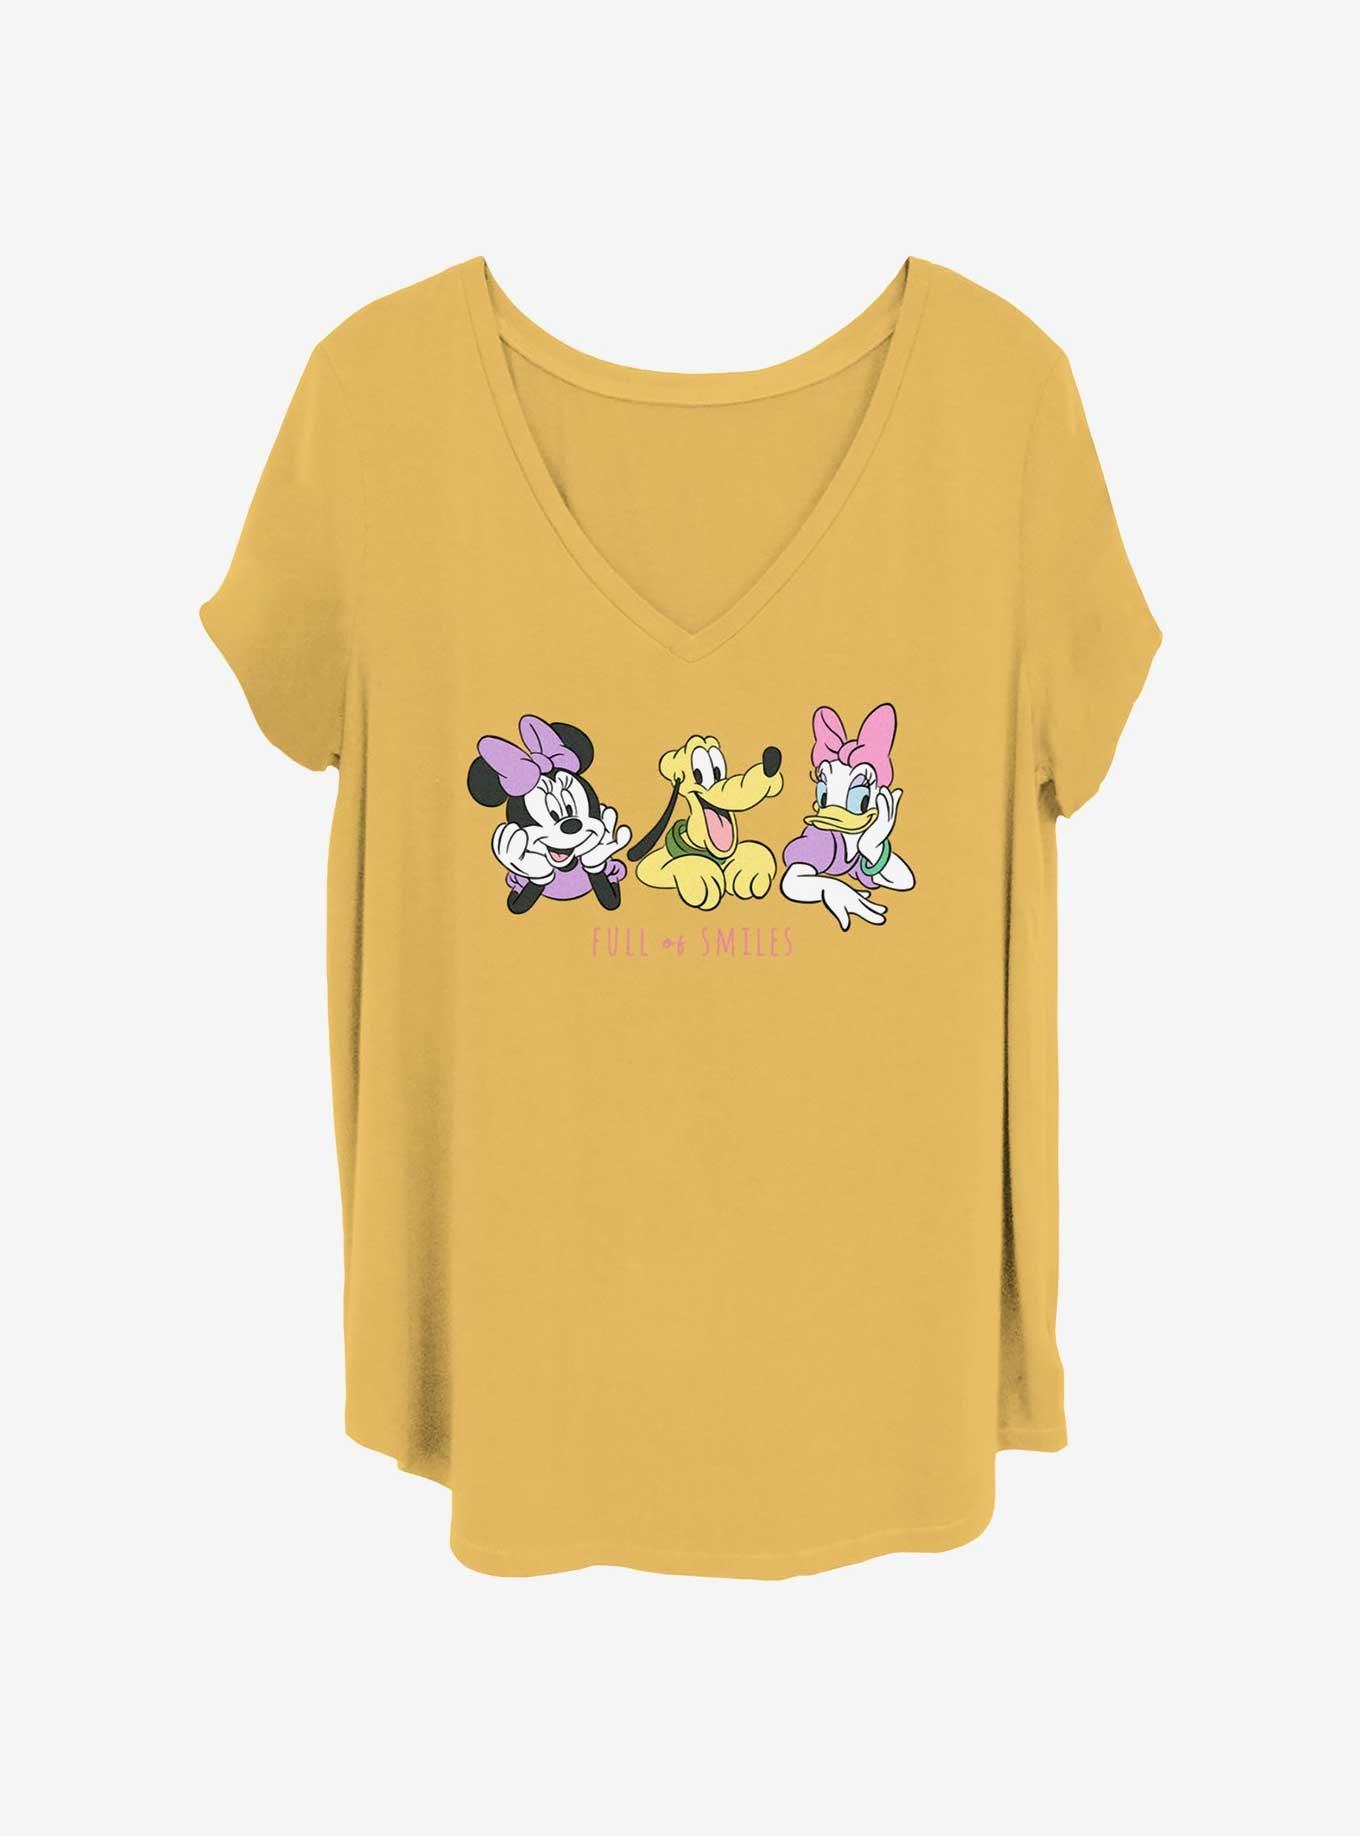 Disney Minnie Mouse, Pluto & Daisy Smiles Girls T-Shirt Plus Size, OCHRE, hi-res